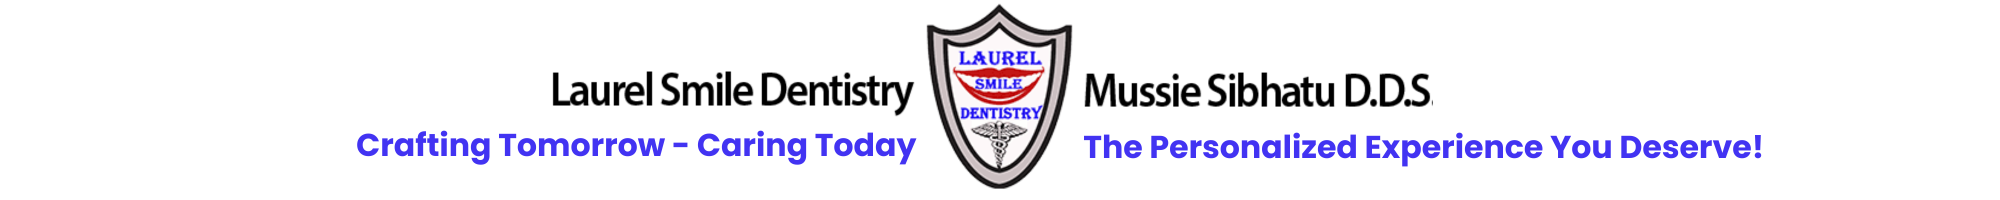 Laurel Smile Dentistry - Oakland California Best Dentist